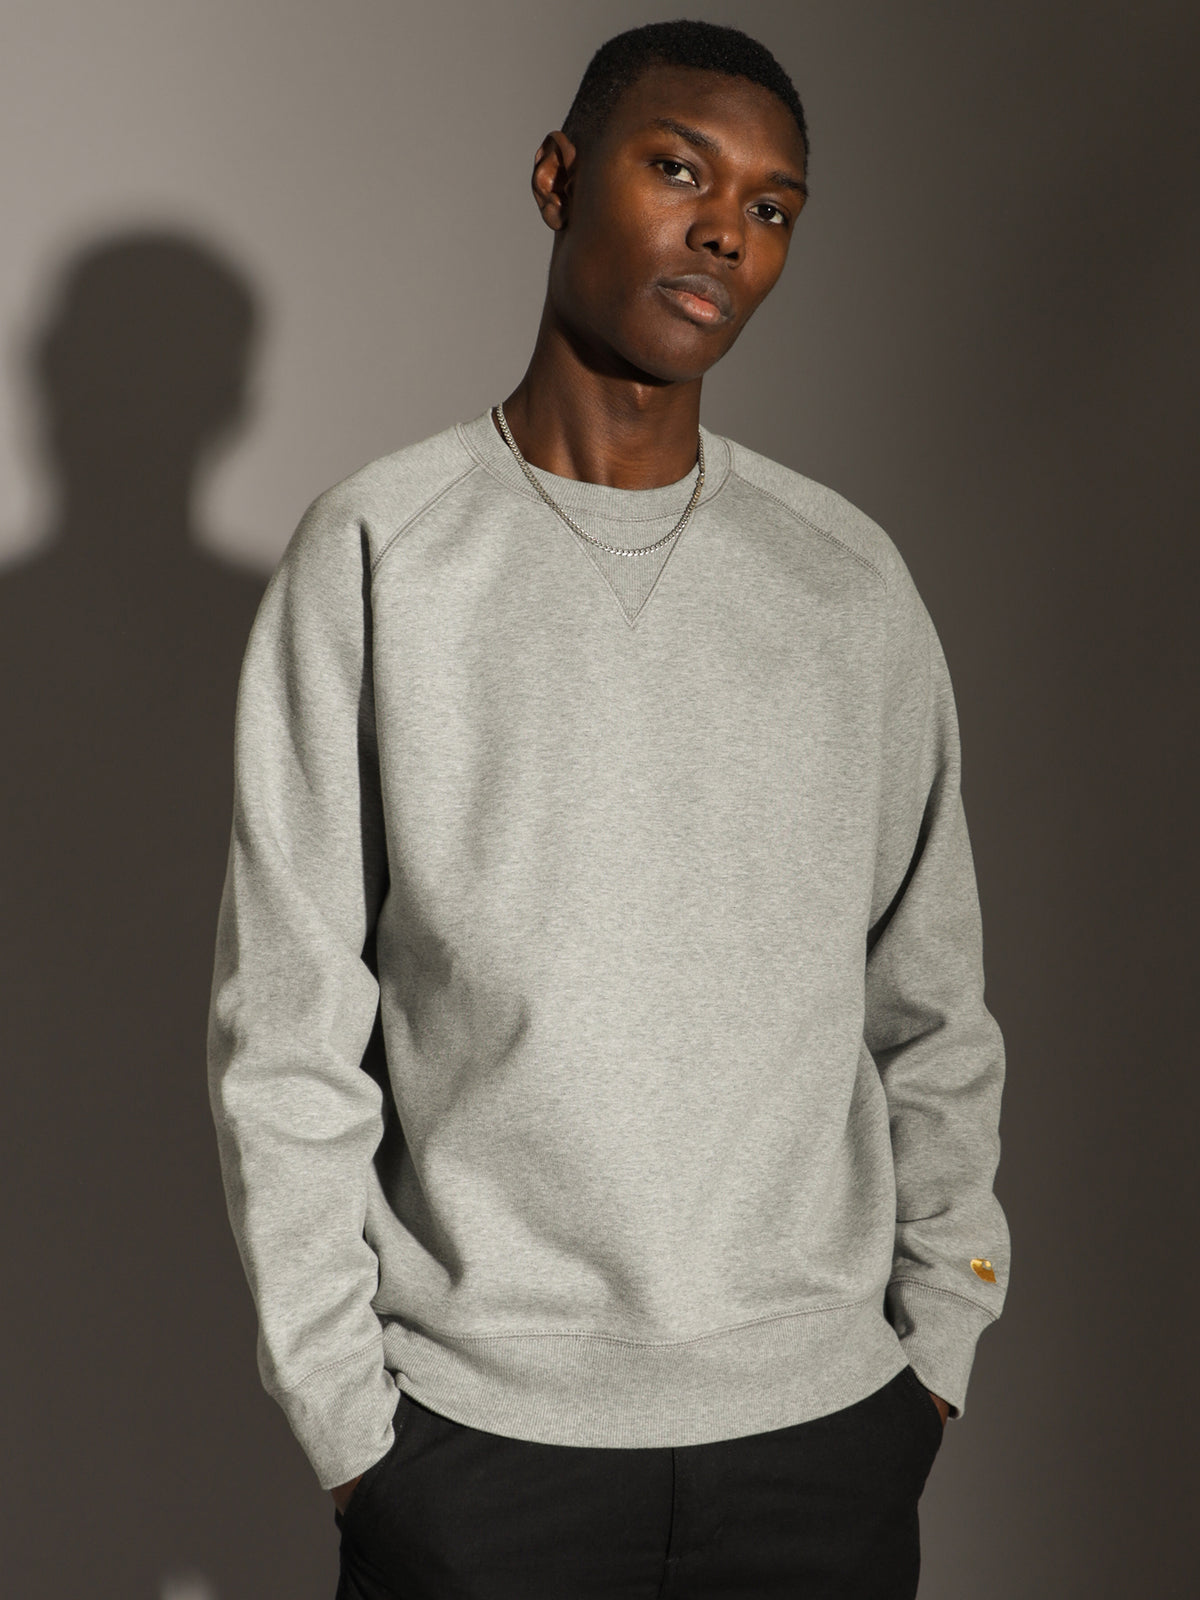 Chase Sweatshirt in Grey